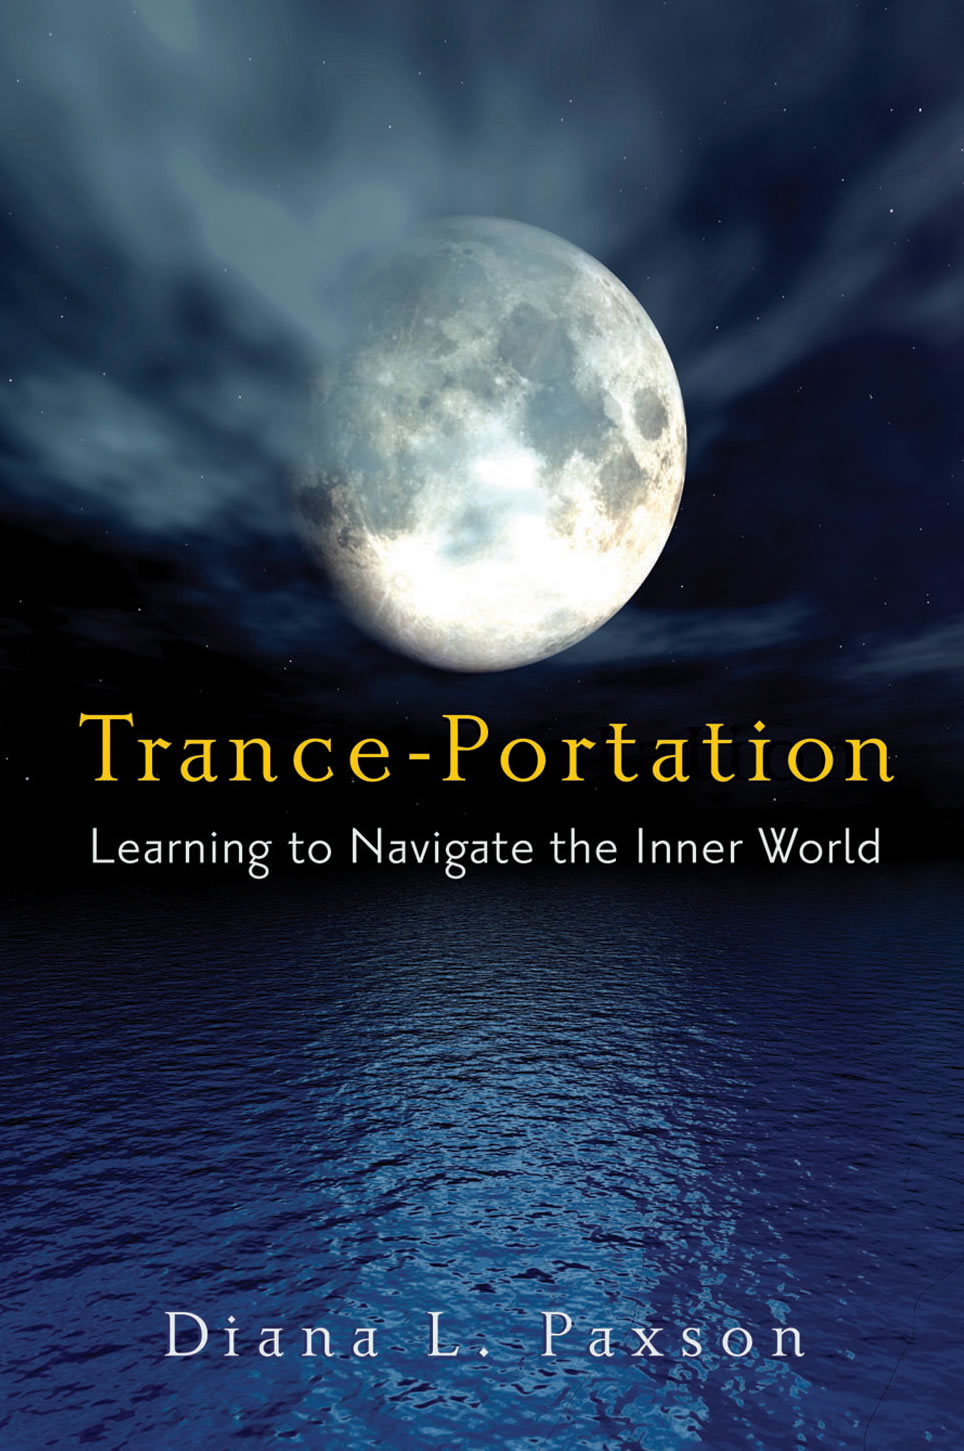 Cover of Diana L. Paxson's "Trance-Portation"